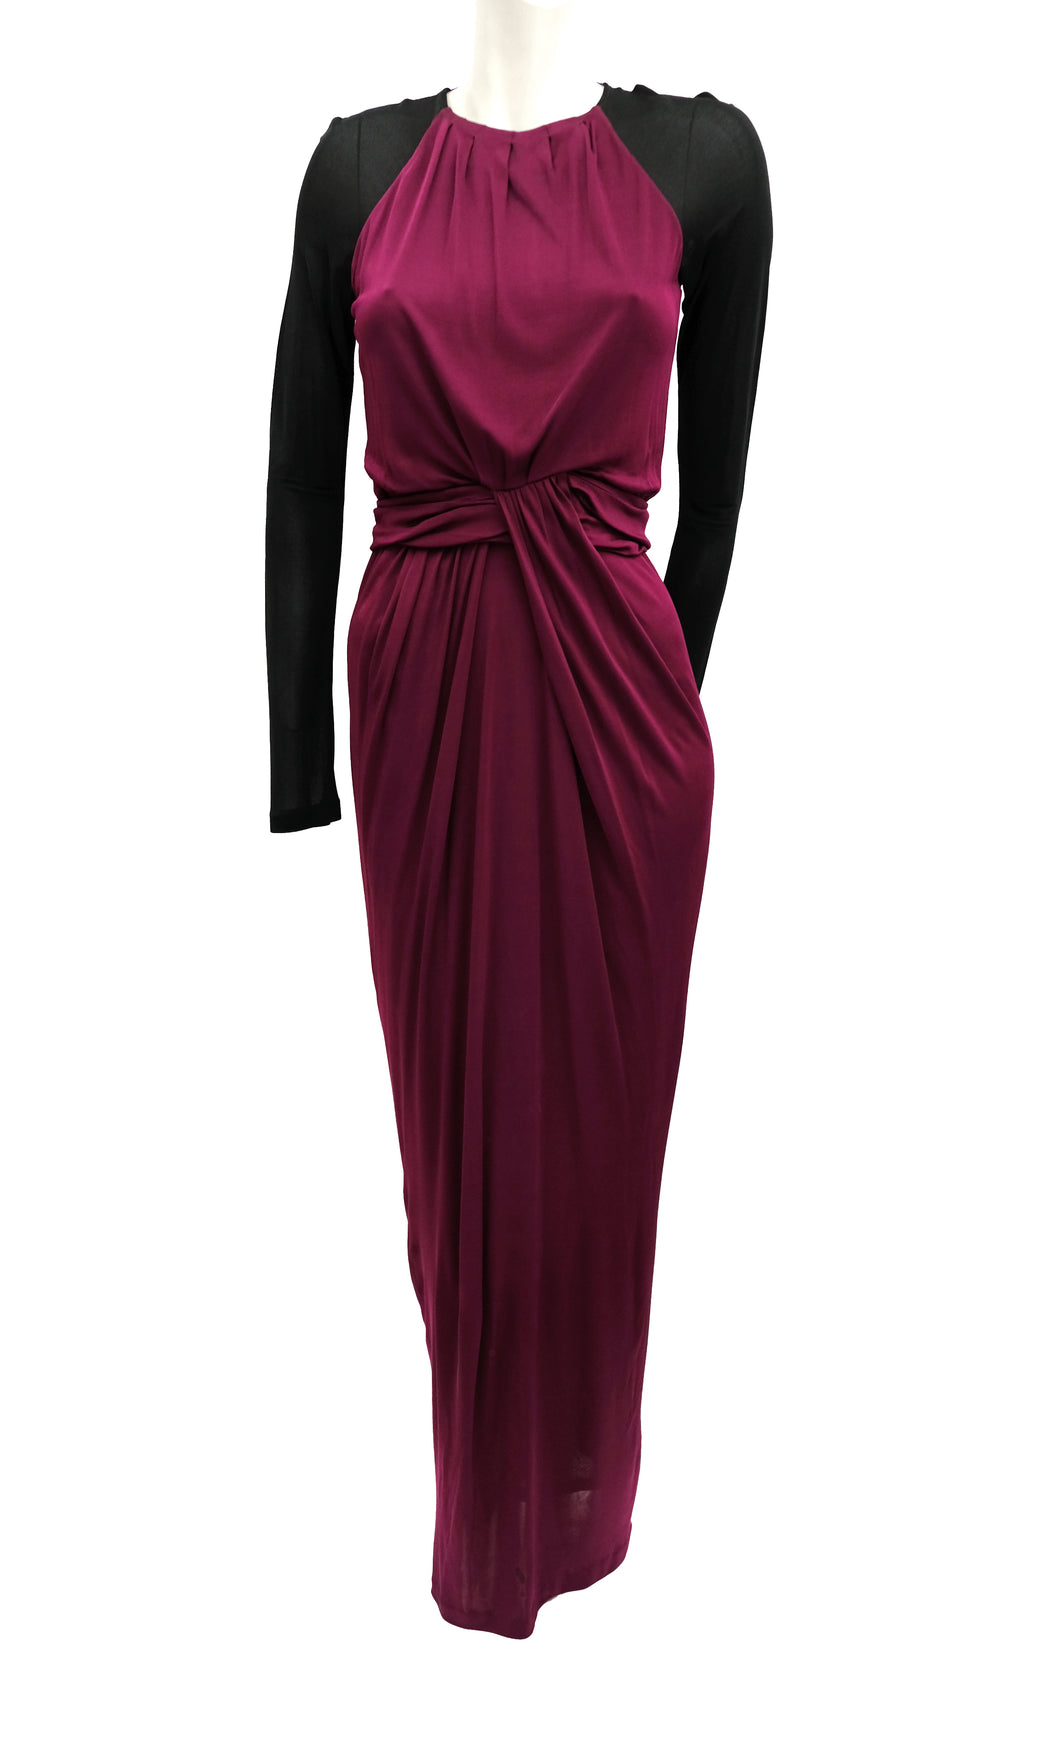 Hugo Boss Burgundy Floor Length Gown with Black Sleeves, UK10